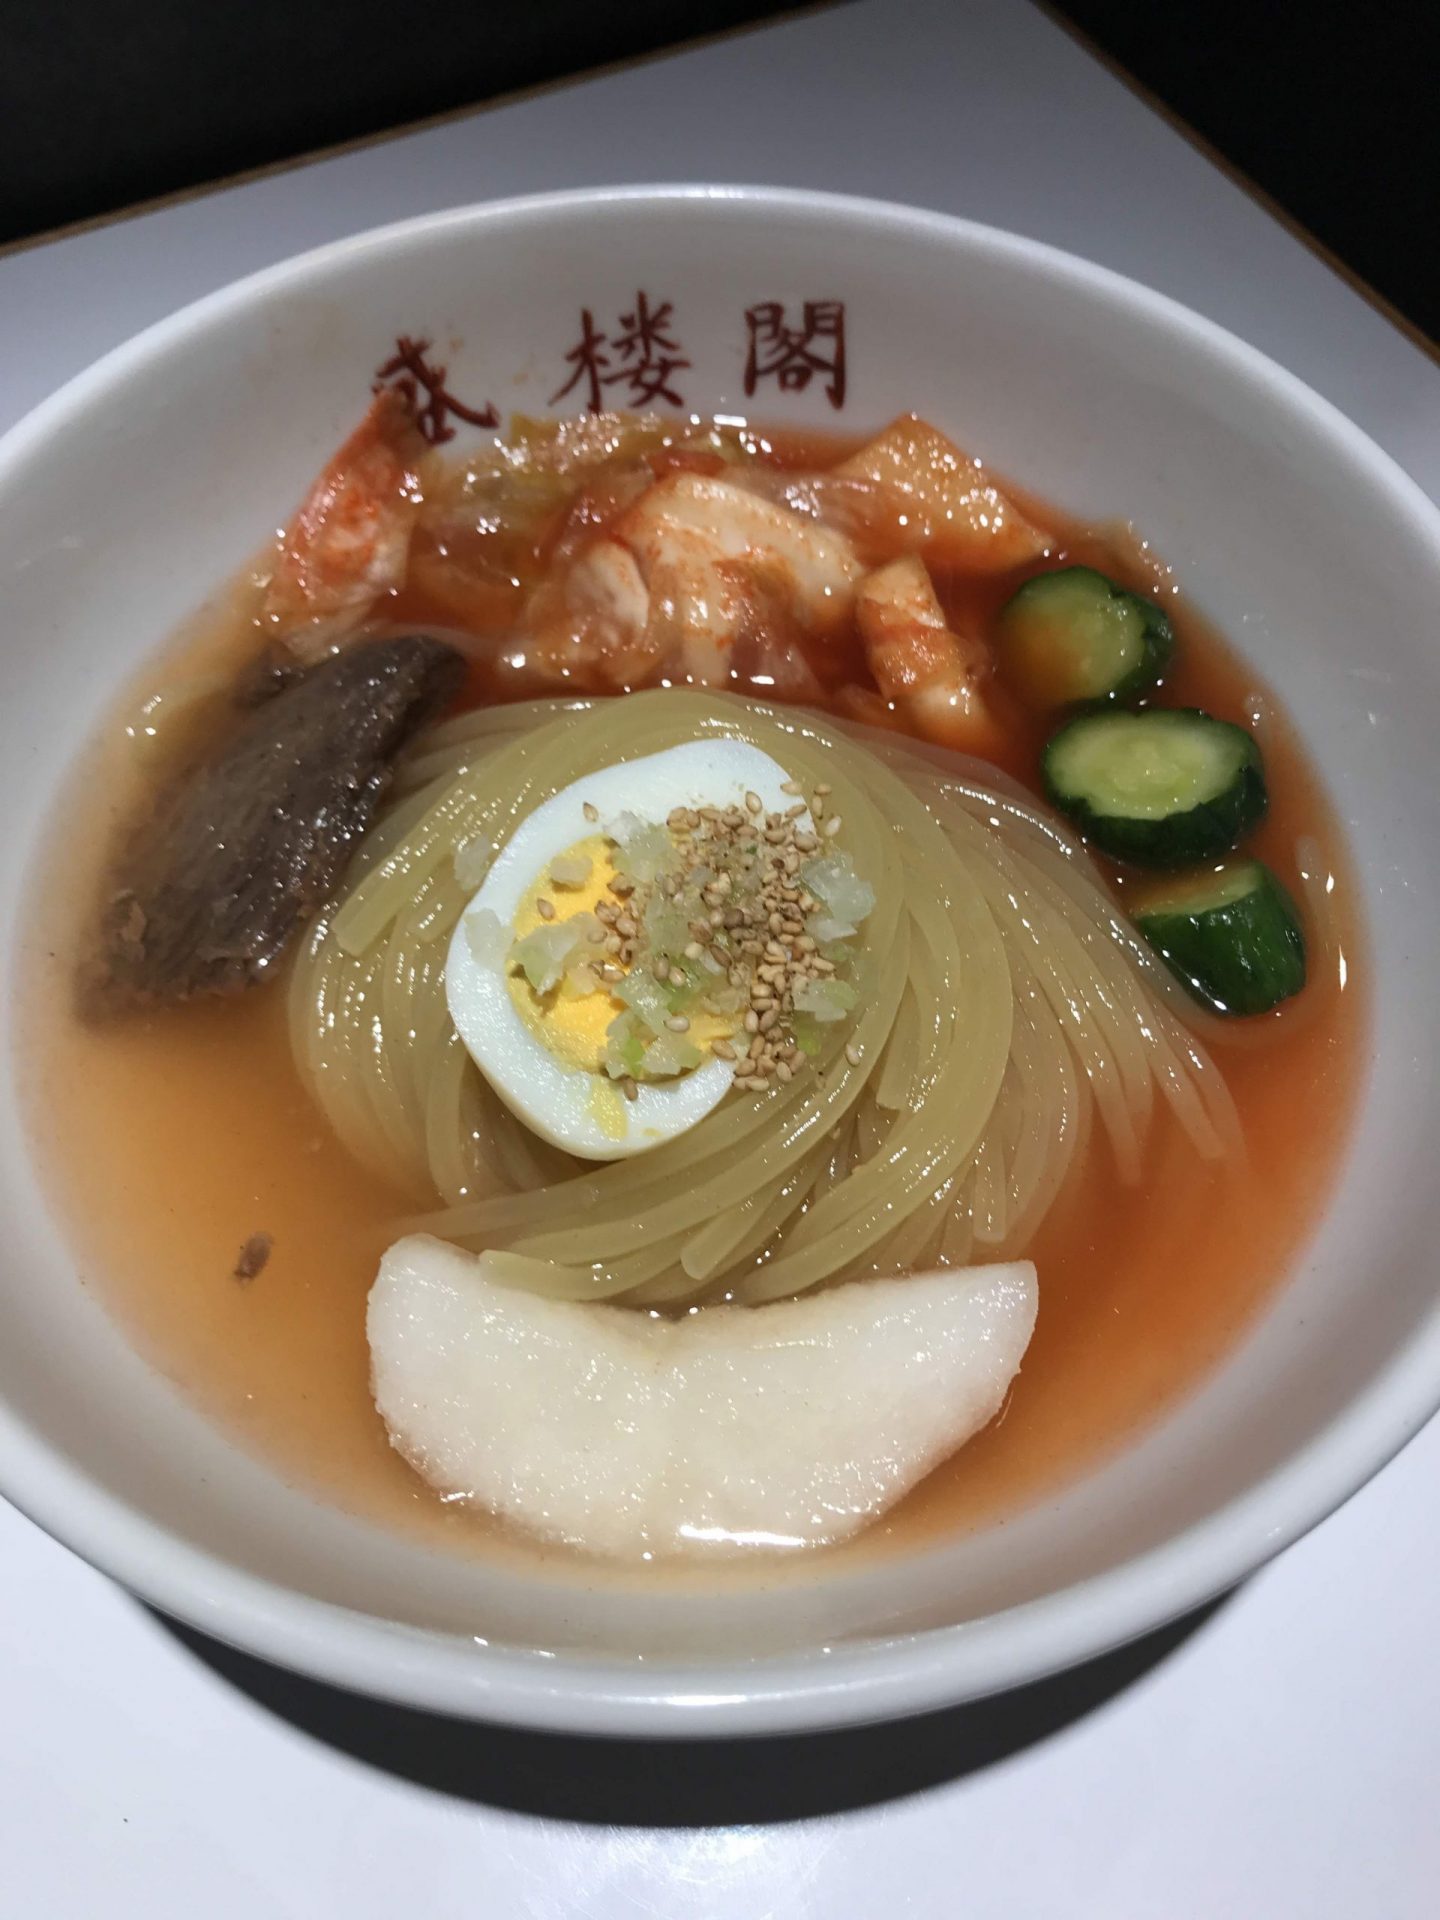 morioka reimen noodles - The Three Great Noodles of Morioka, Japan